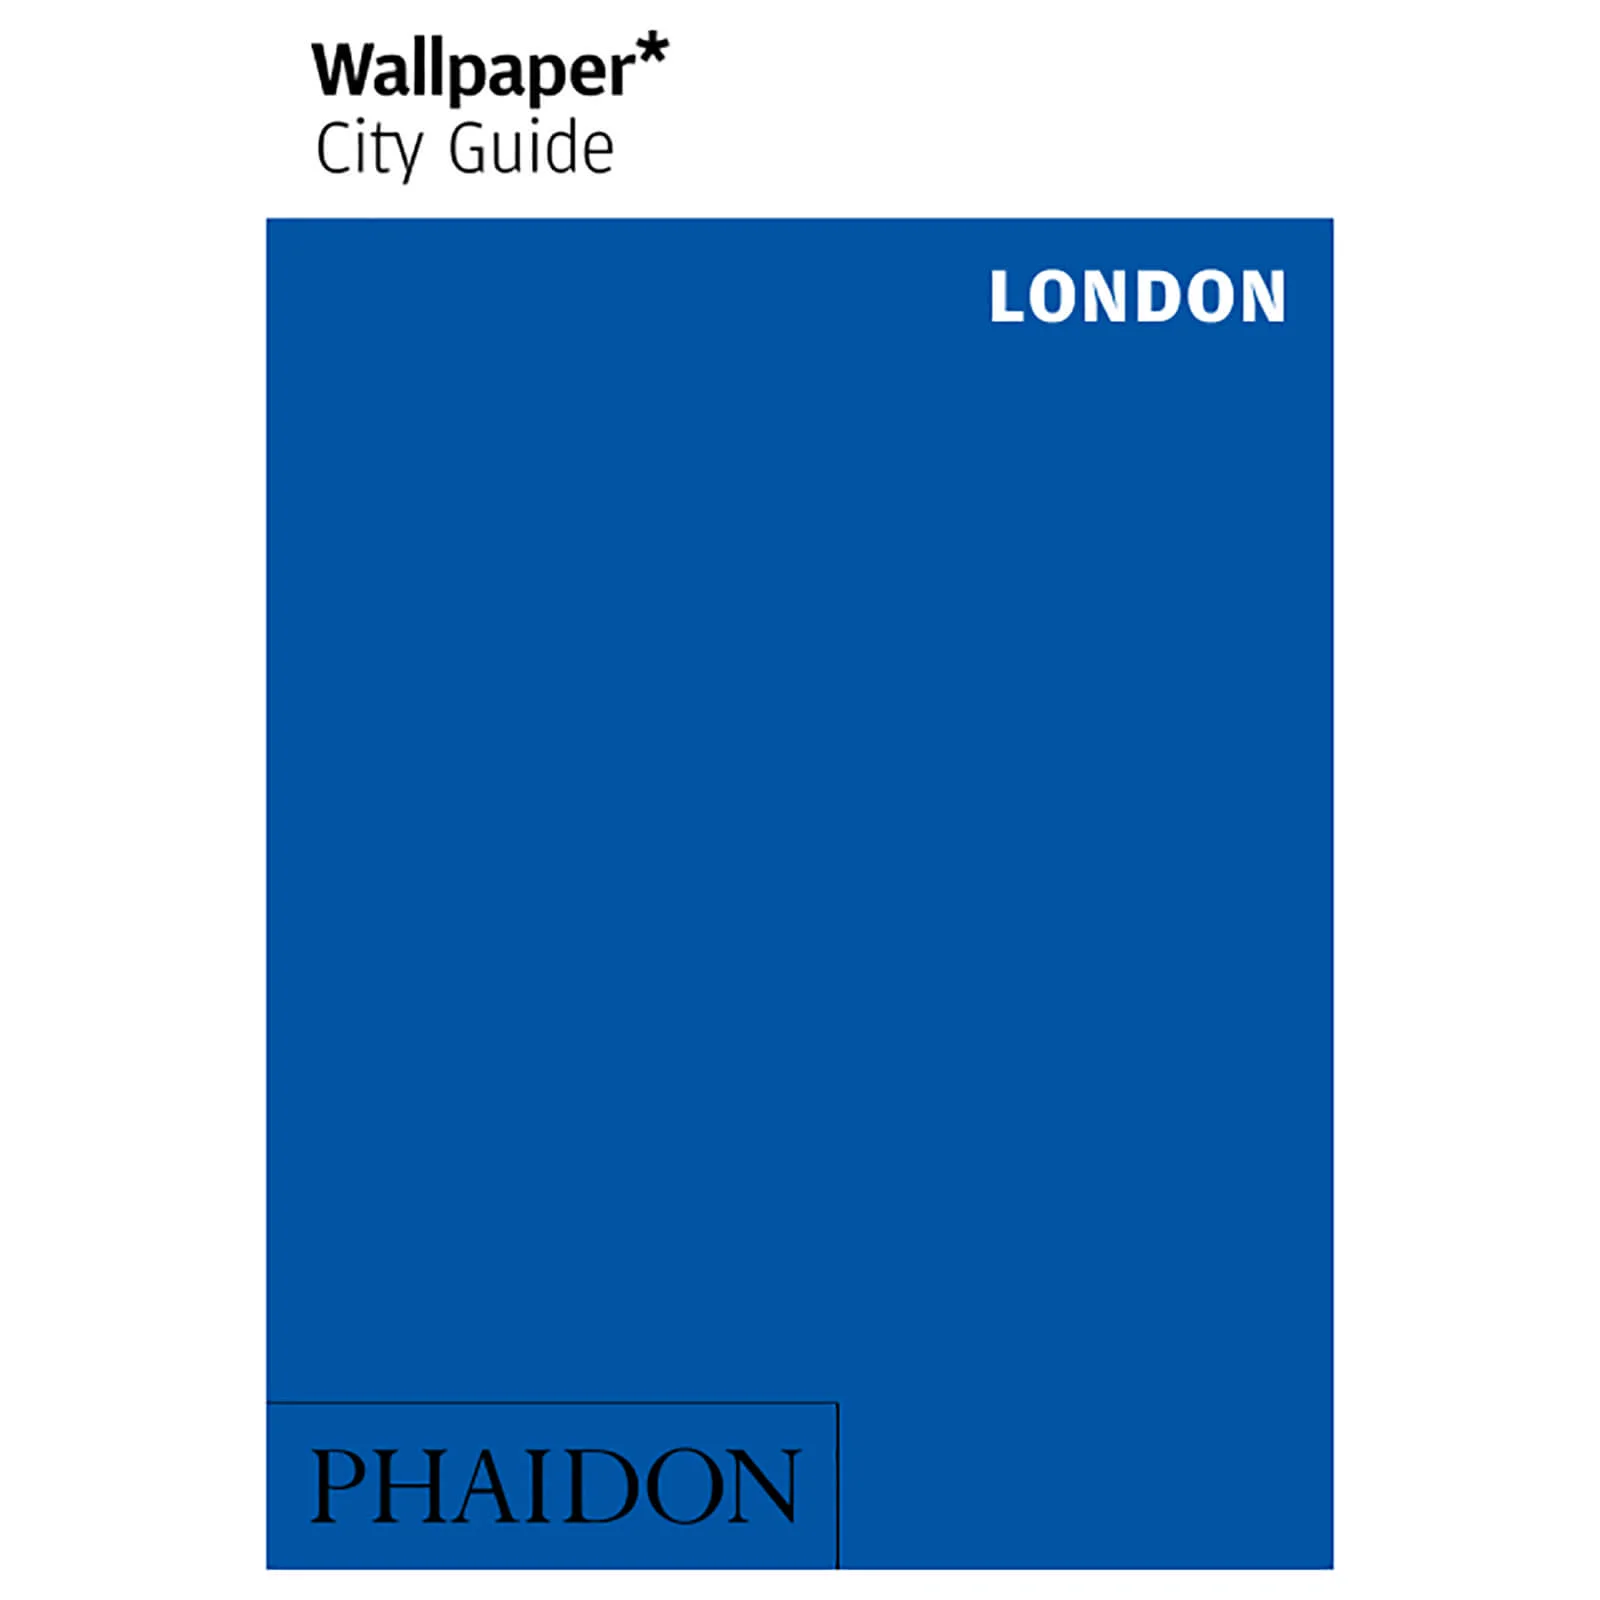 Phaidon: Wallpaper* City Guide - London Image 1